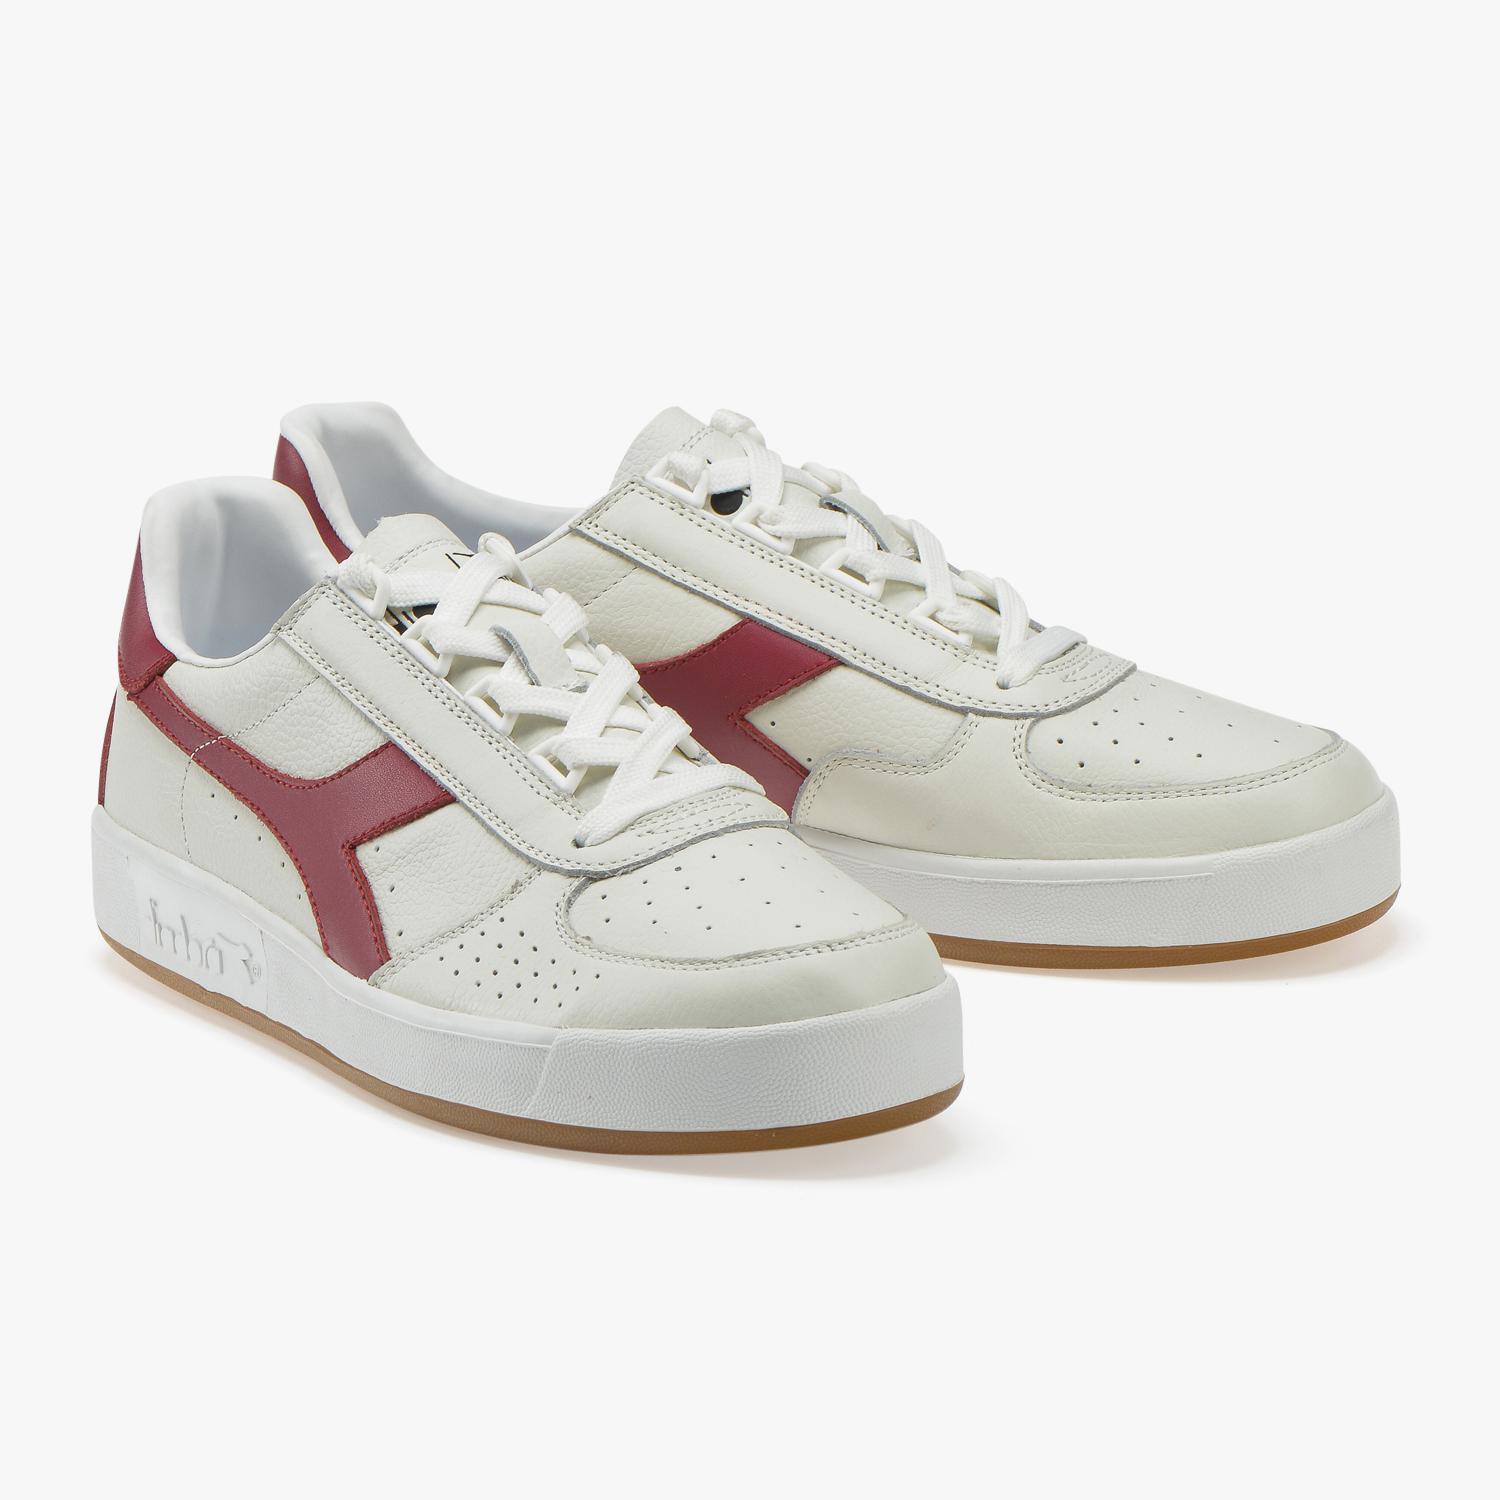 Diadora Mens B.Elite Premium L Shoes - White/Red - Tennisnuts.com